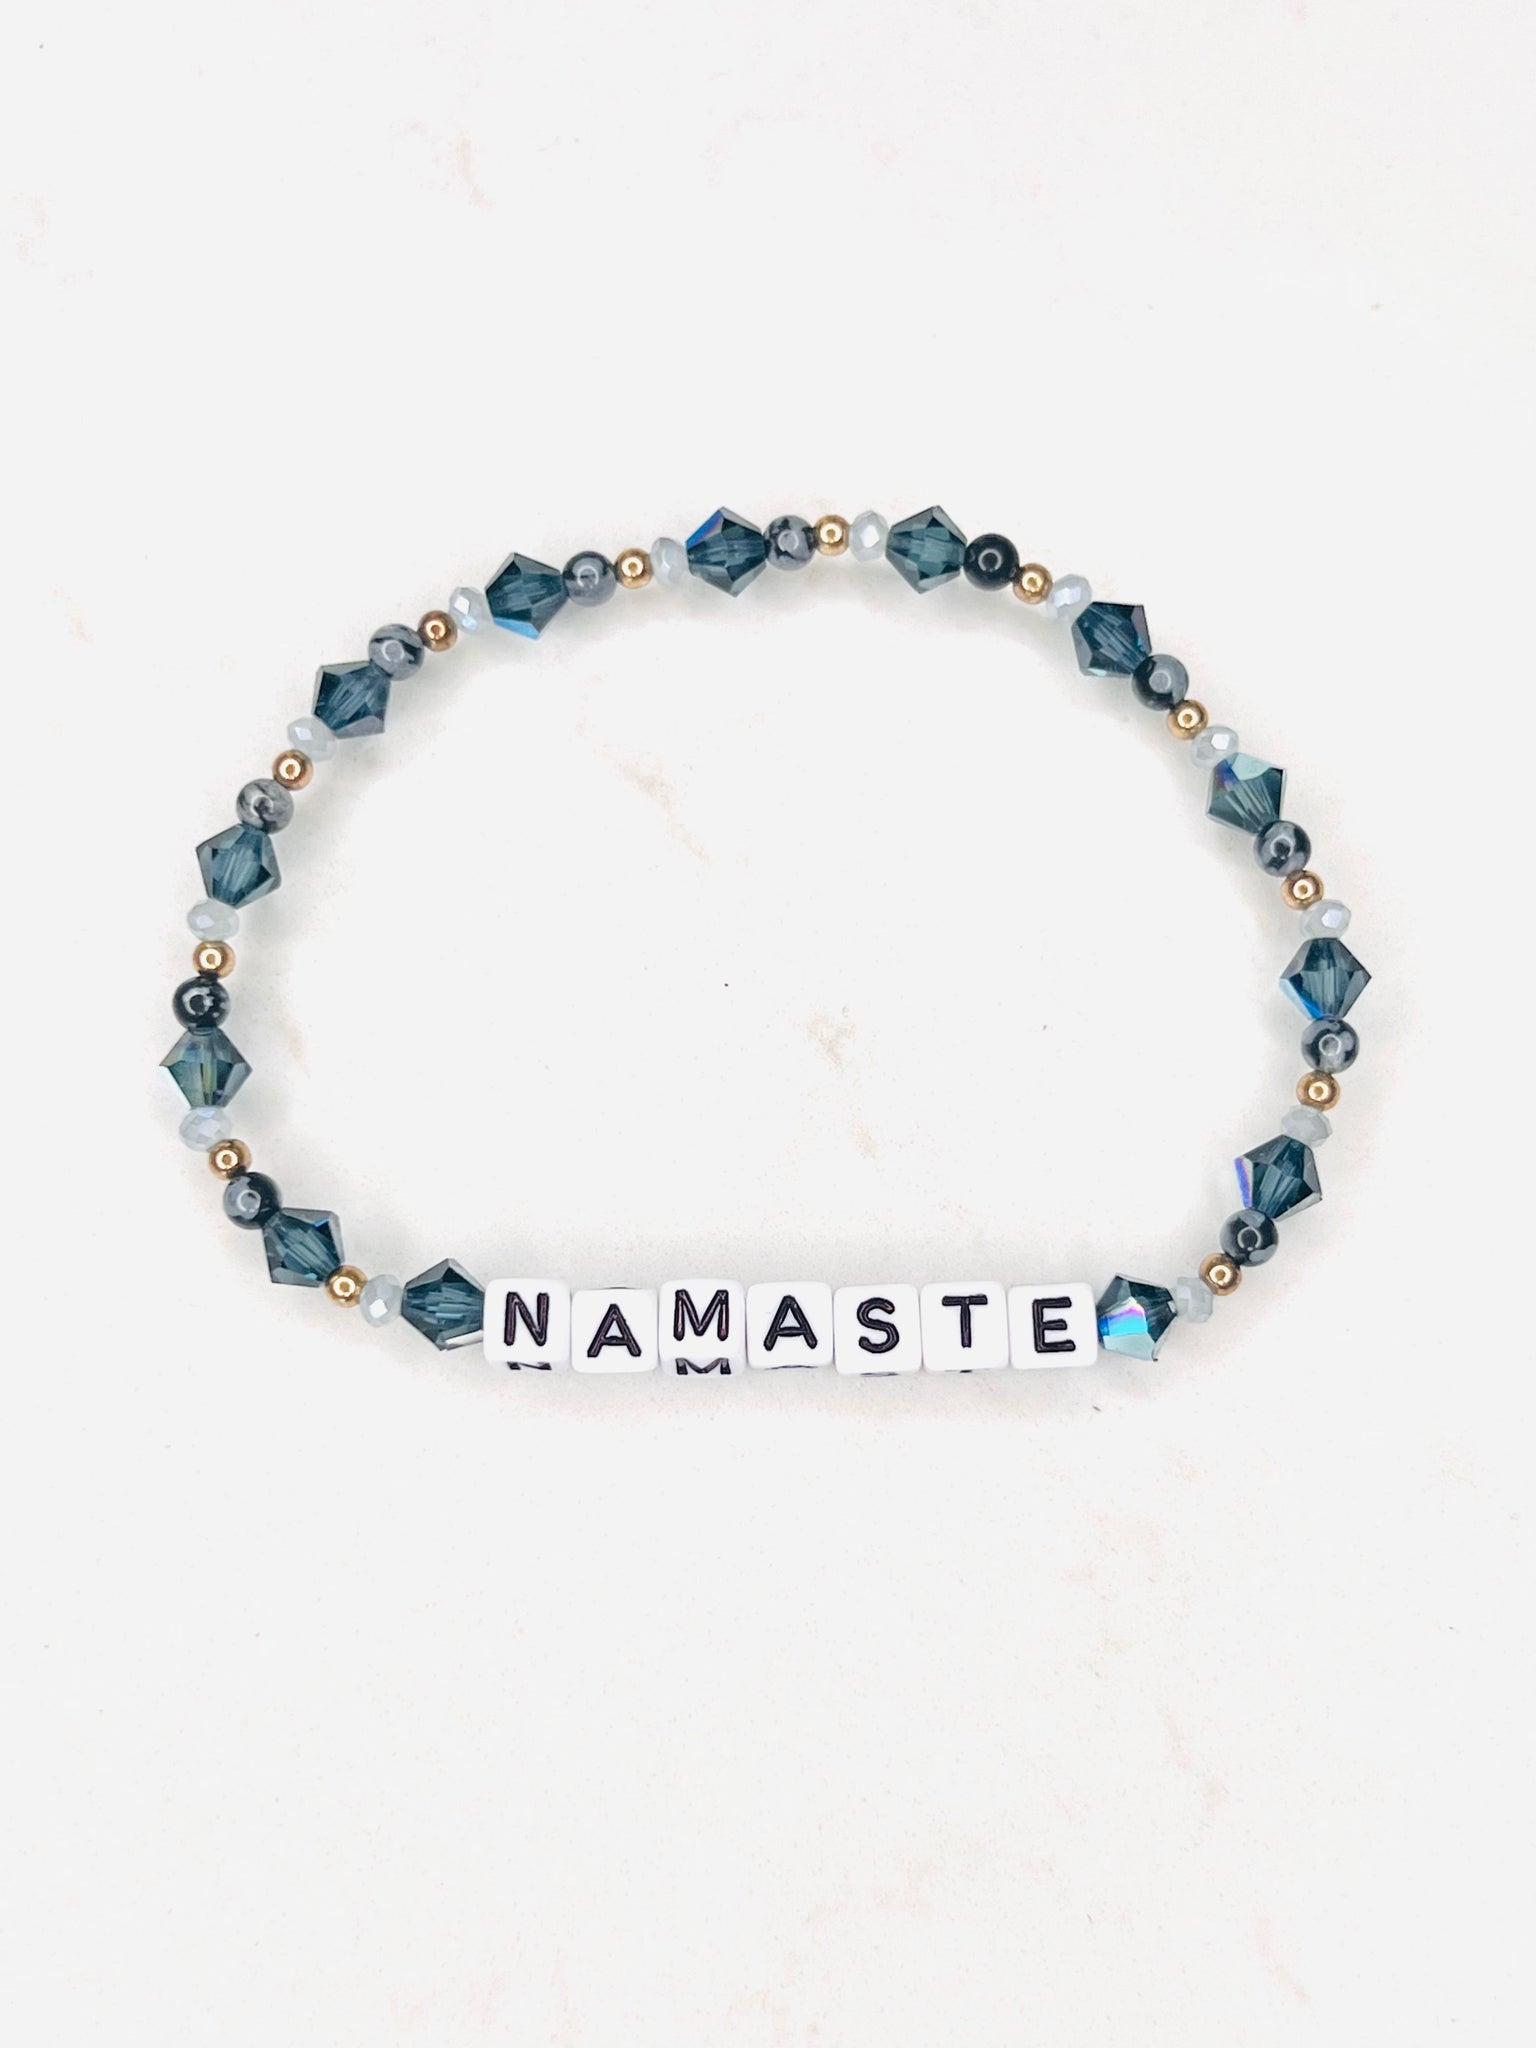 Namaste Bracelet